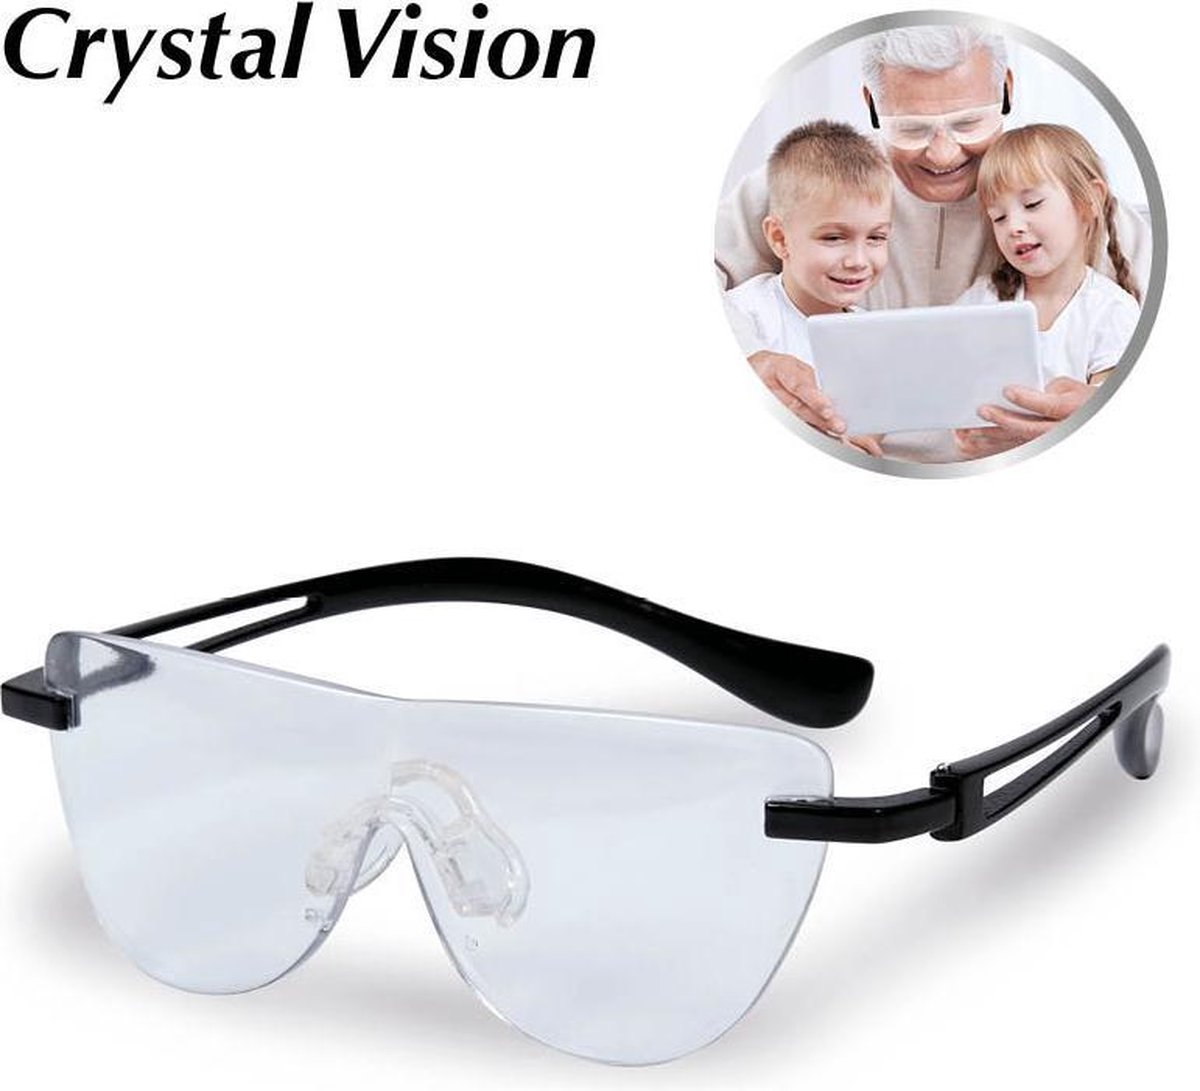 Crystal Vision Glasses - verstelbare vergrotende bril | bol.com